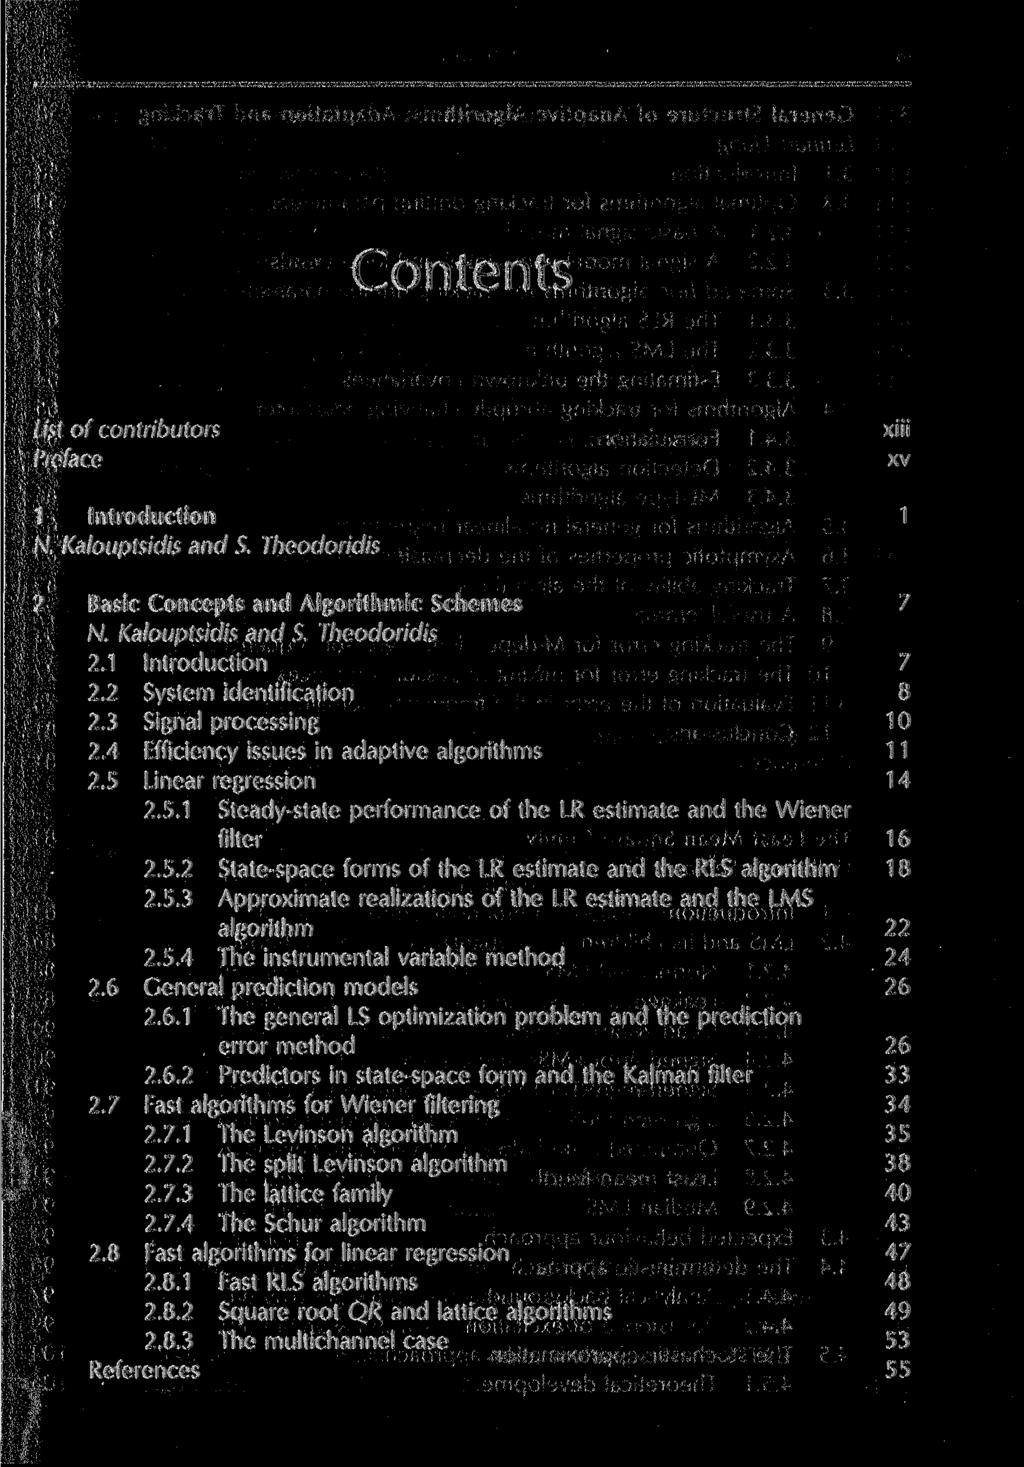 List of contributors Preface xiii xv 1 Introduction 1 N. Kalouptsidis and S. Theodoridis 2 Basic Concepts and Algorithmic Schemes 7 N. Kalouptsidis and S. Theodoridis 2.1 Introduction 7 2.